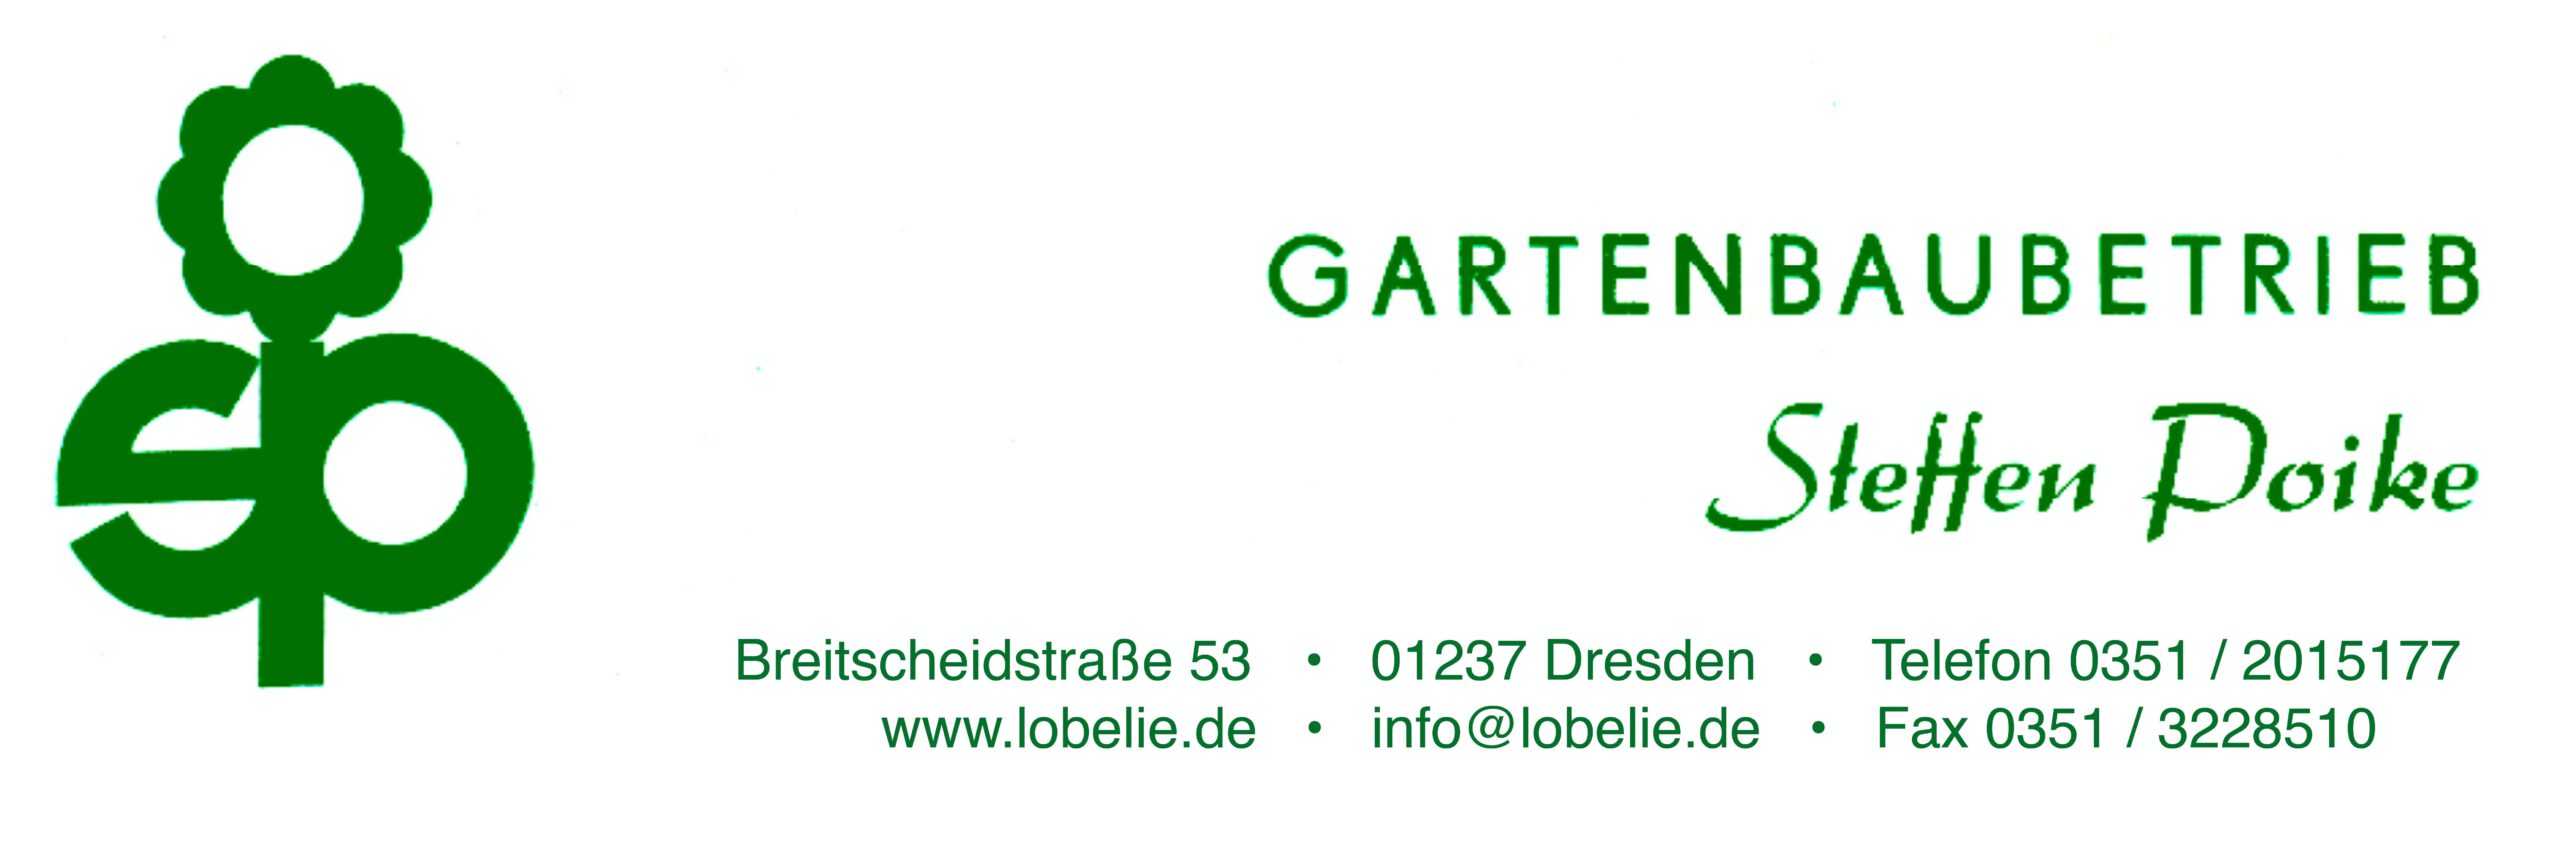 Gartenbau Poike Logo